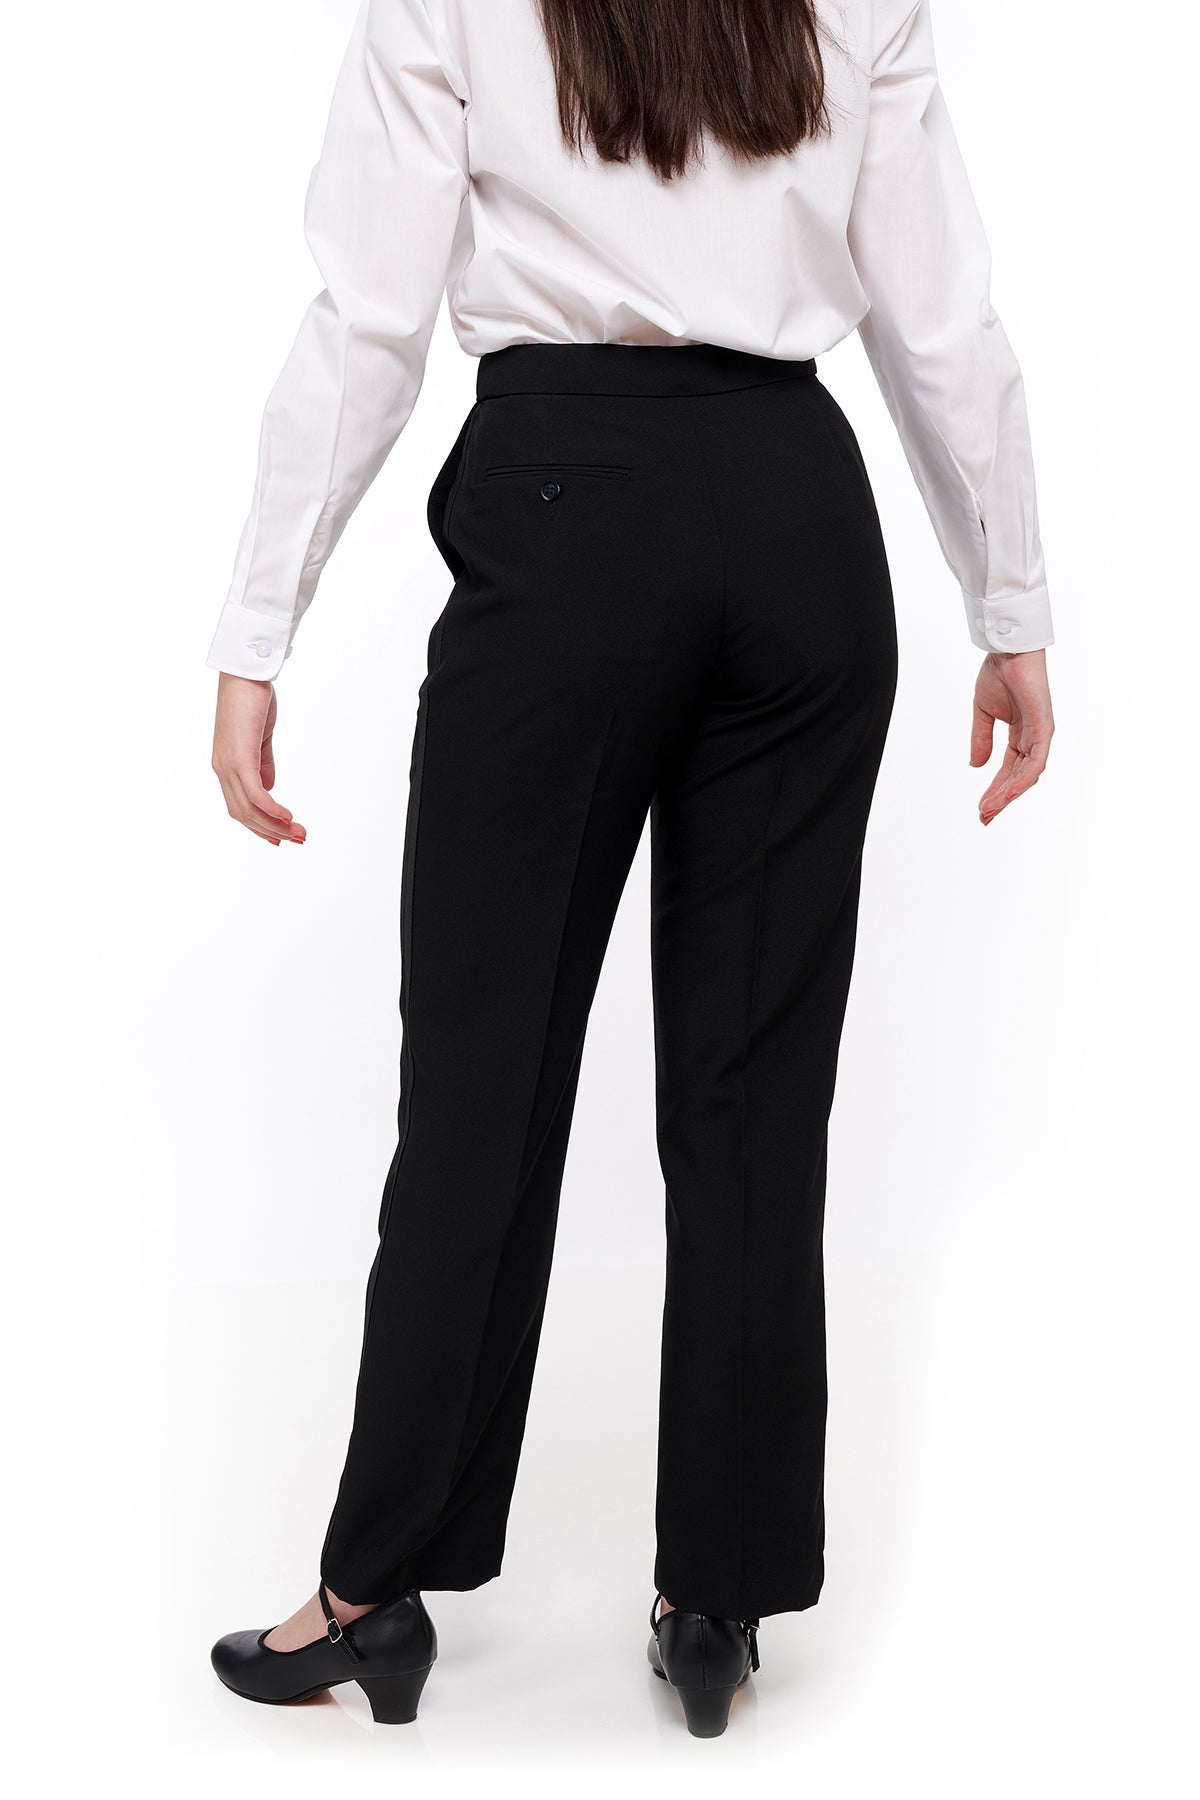 Calvin Klein Womens HighWaist Tuxedo Pants Black Size 14